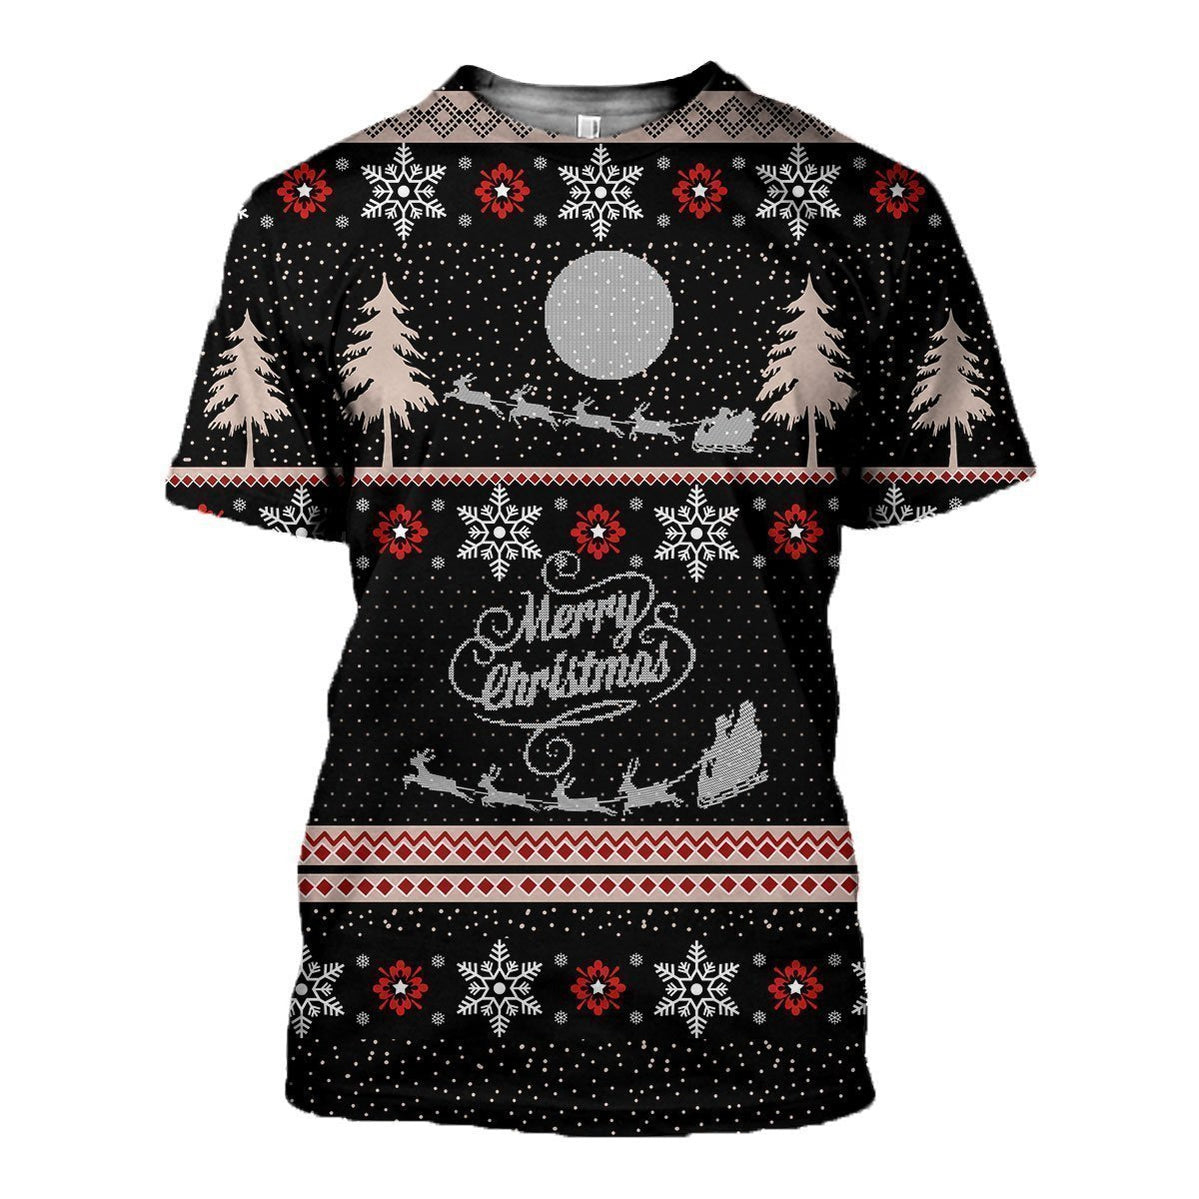 Merry Christmas Knitting All Over Printed 3D Shirt - 3D T-Shirt - Black